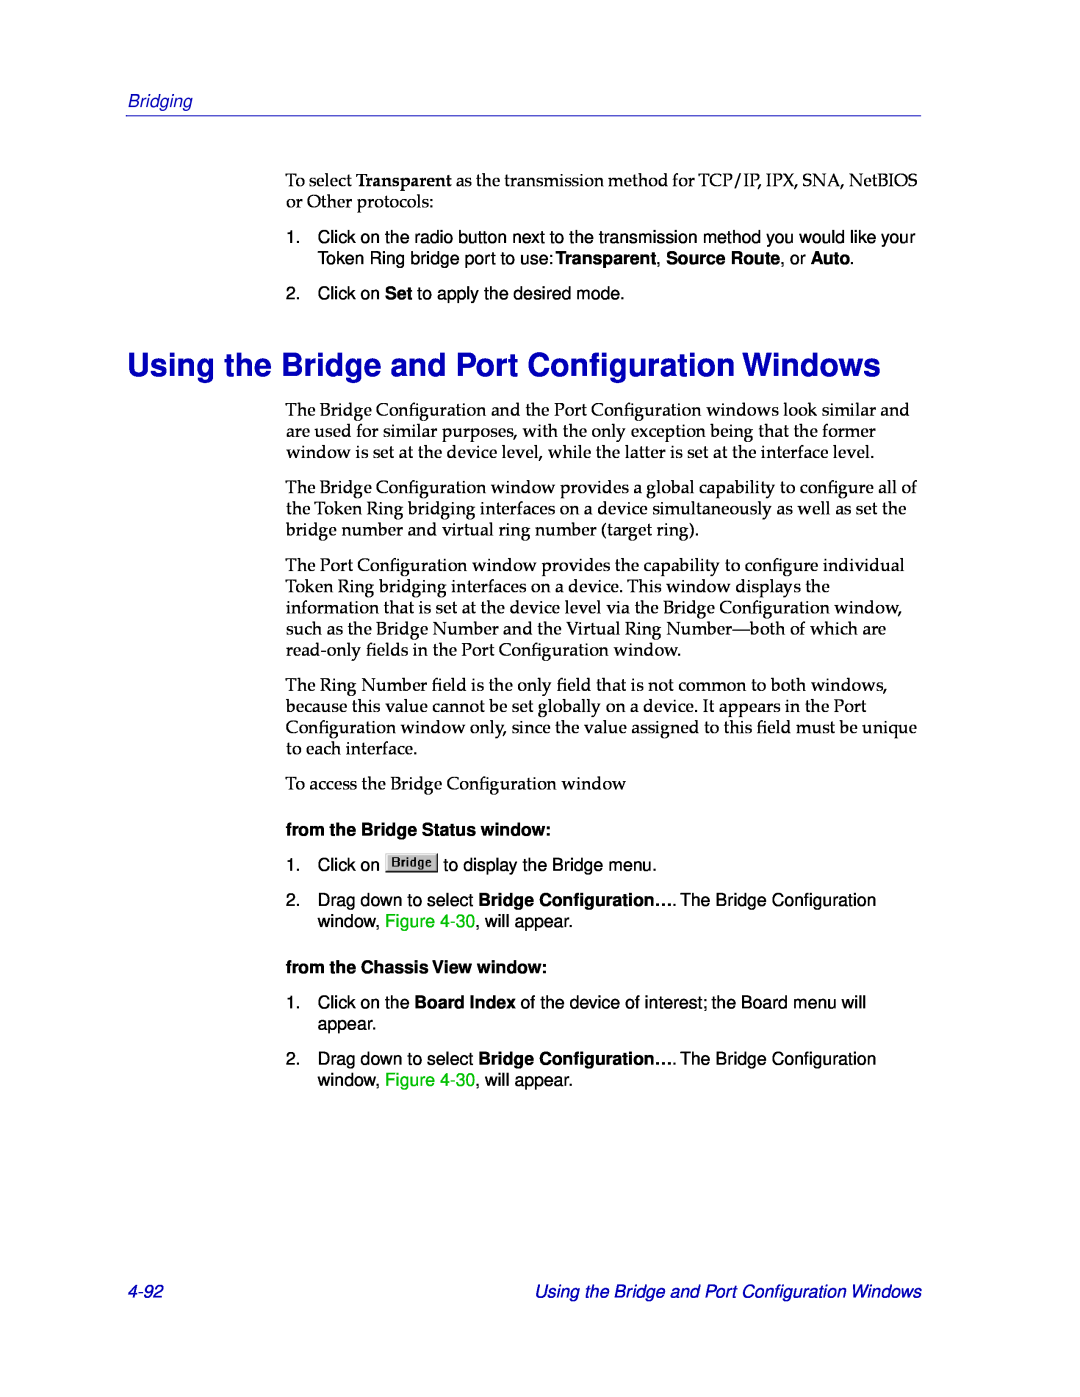 Cabletron Systems CSX400 Using the Bridge and Port Conﬁguration Windows, 4-92, Bridging, from the Bridge Status window 